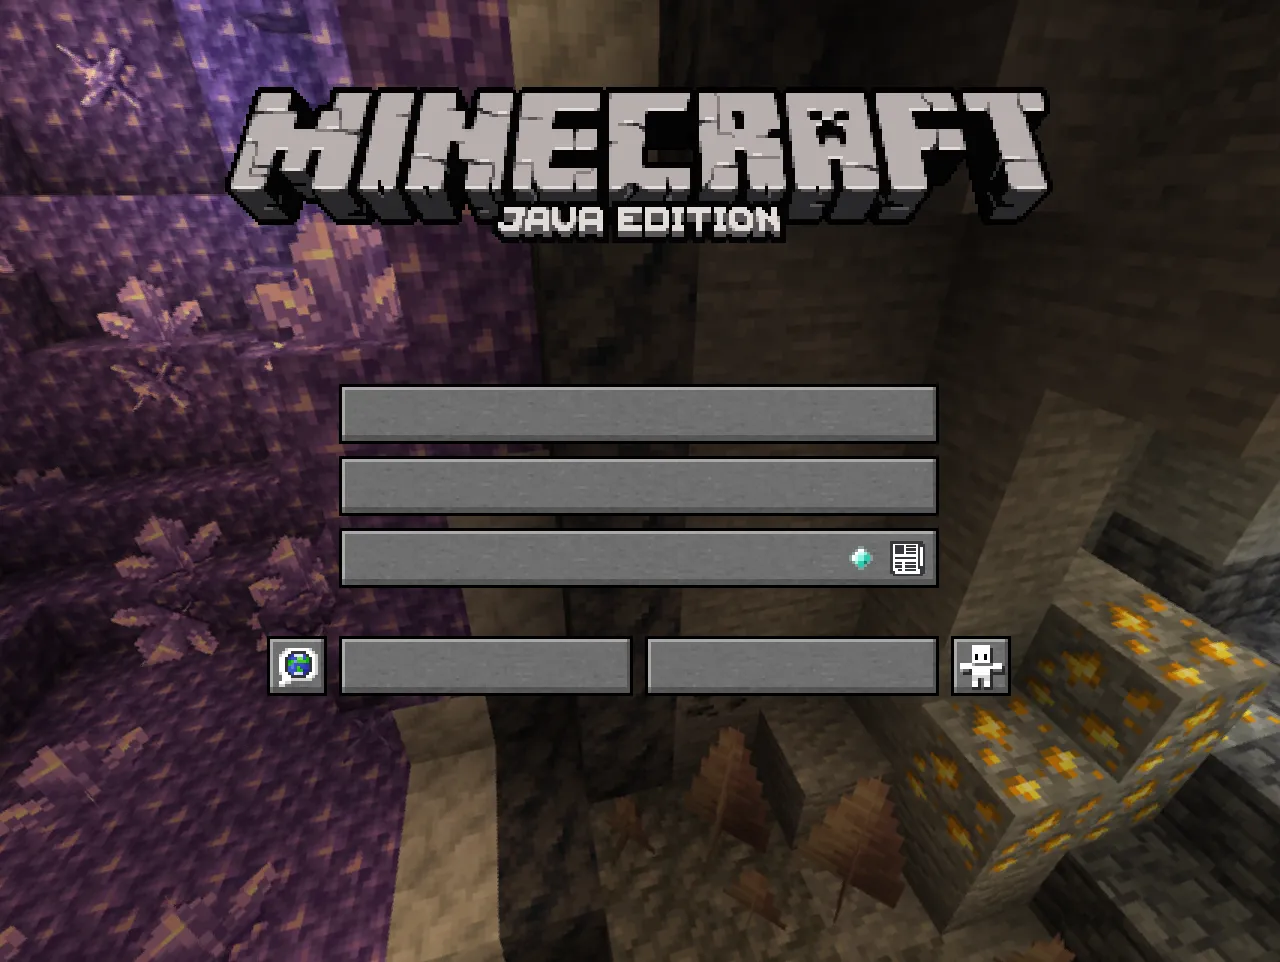 The Minecraft Java edition start screen